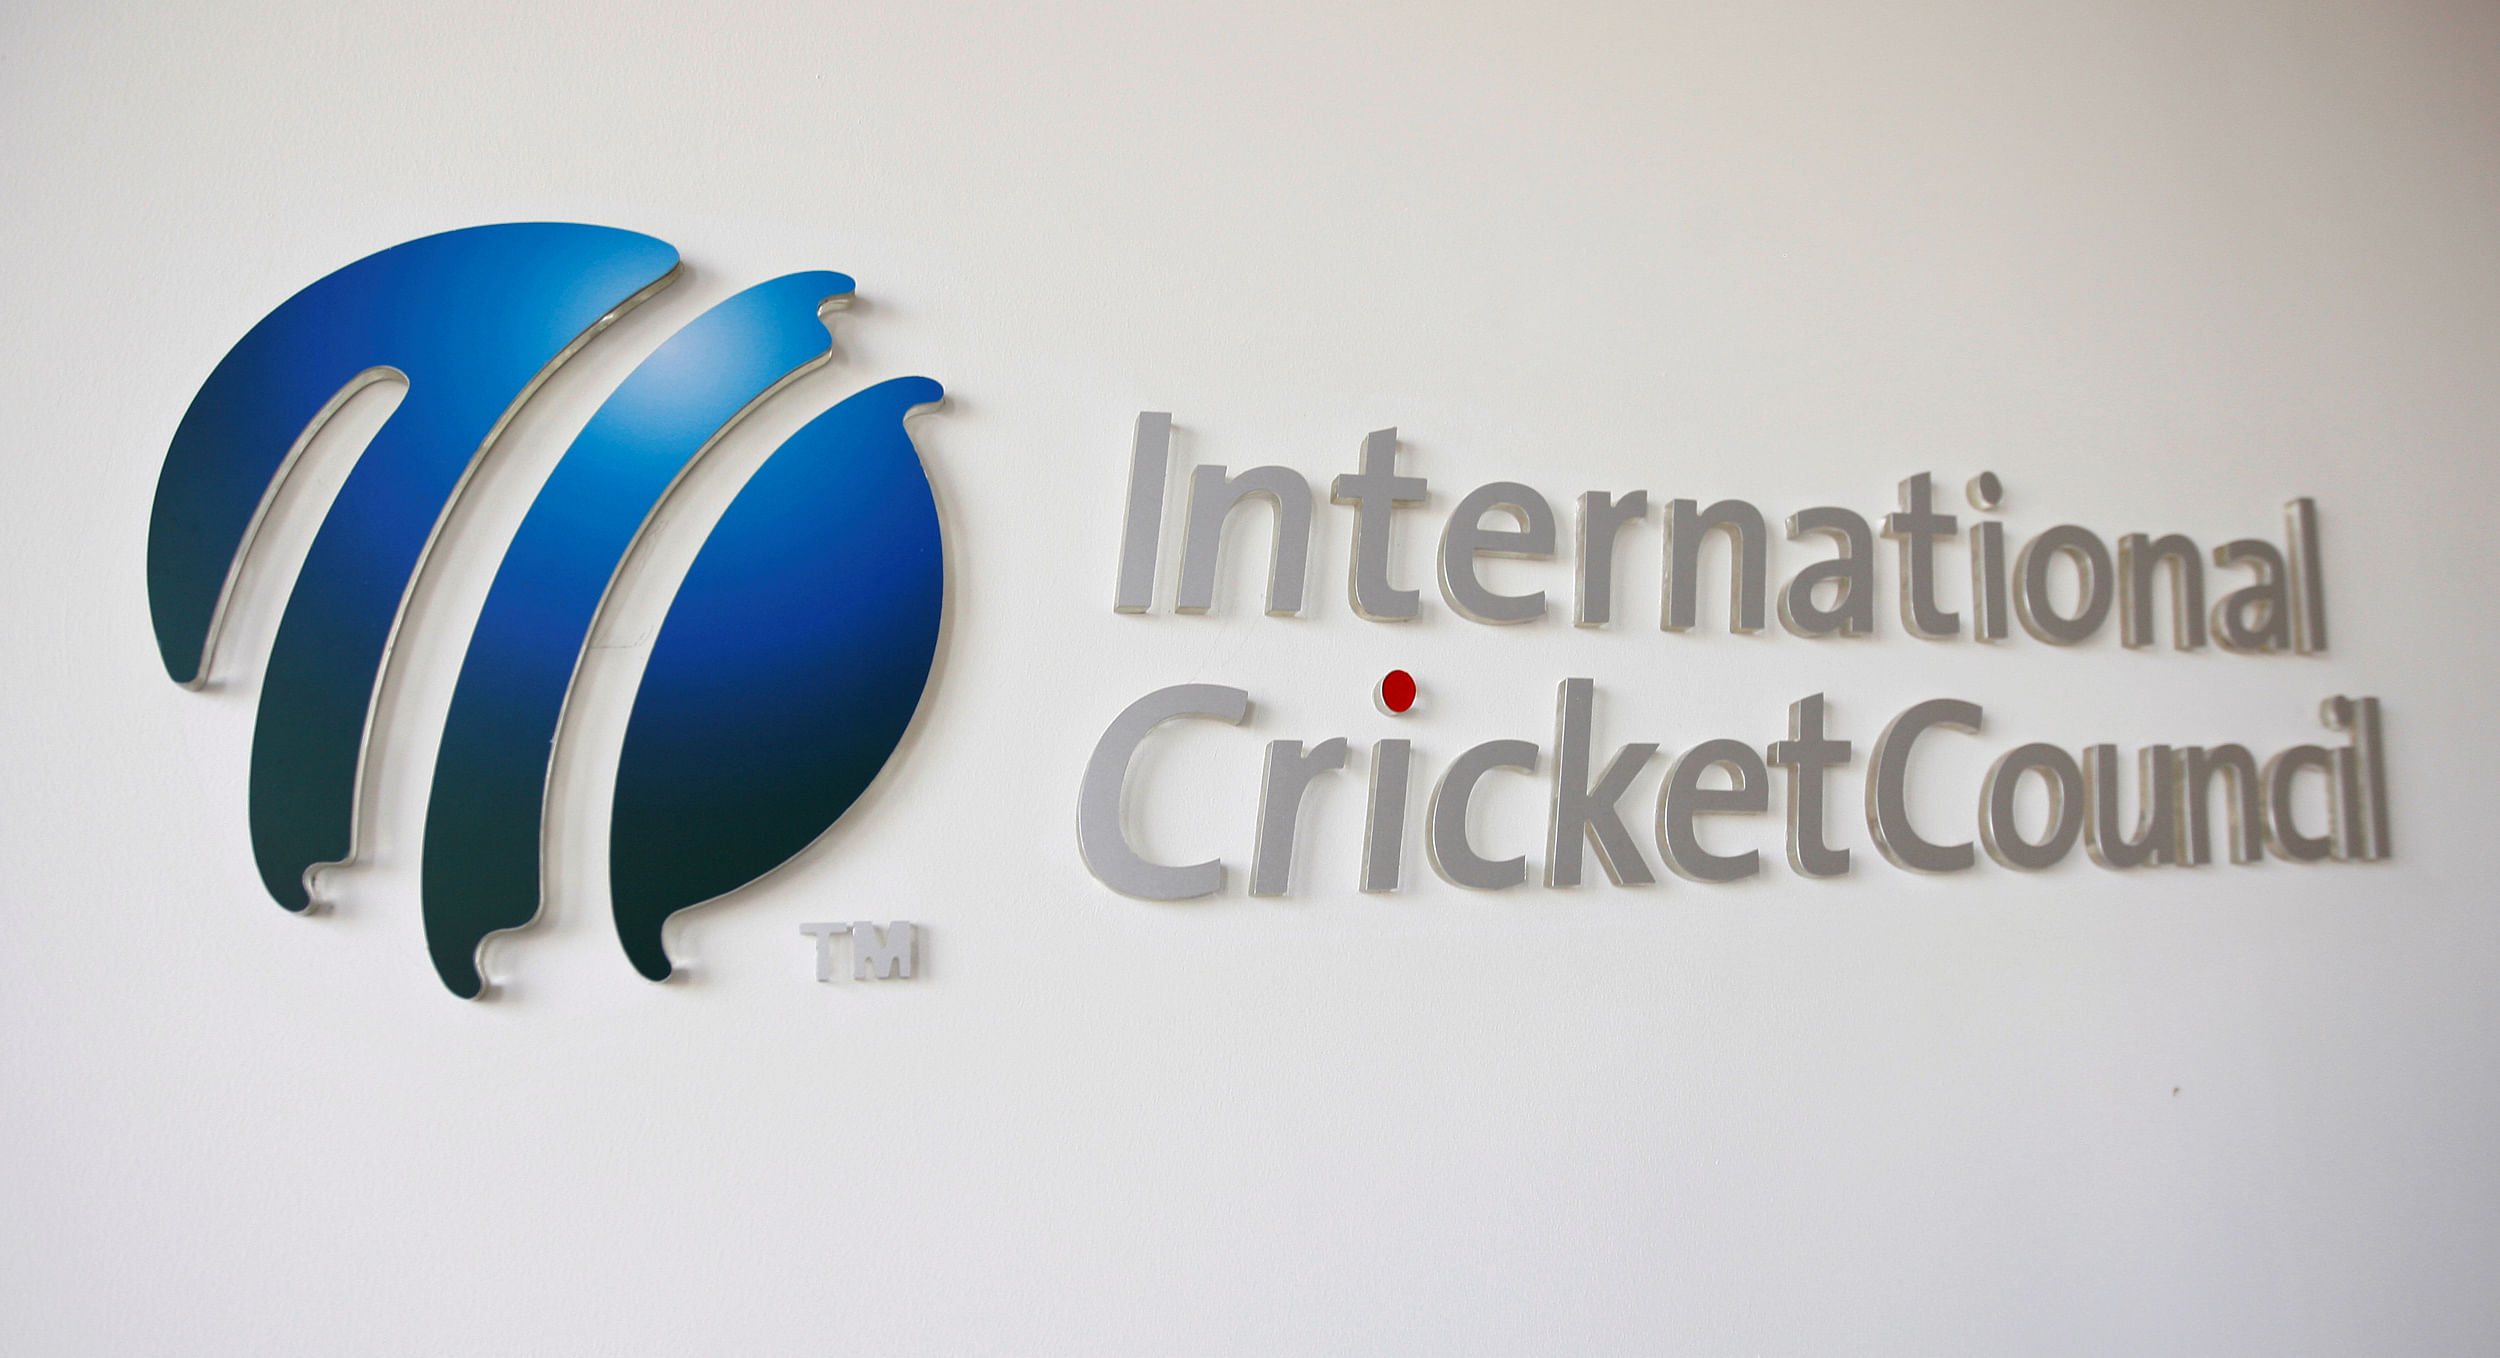 The International Cricket Council (ICC) logo. Credits: Reuters Photo